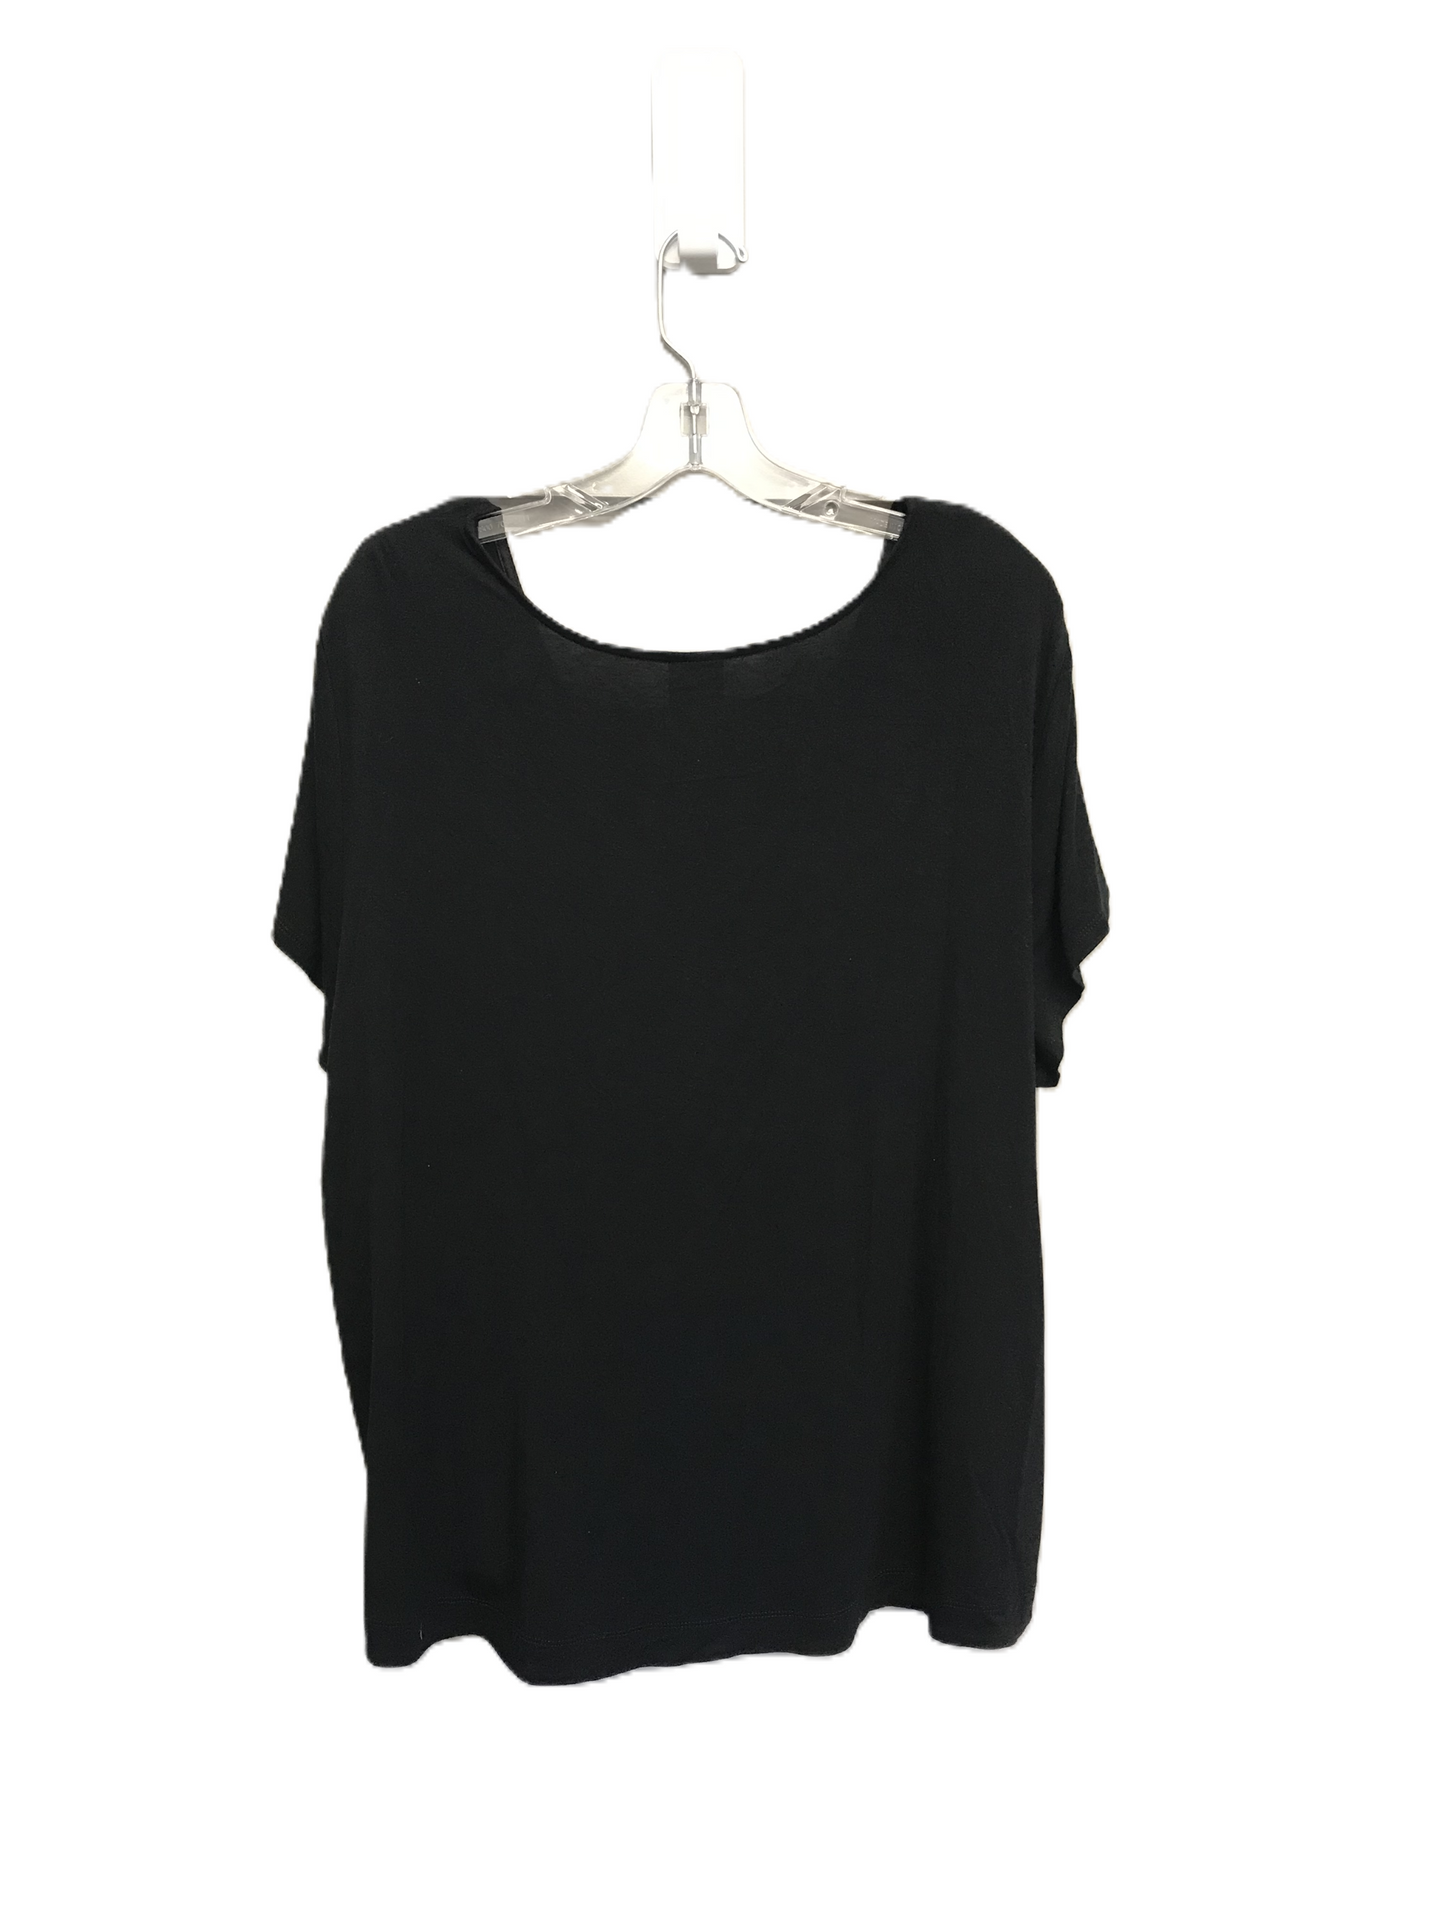 Black Top Short Sleeve Basic By Soma, Size: 1x